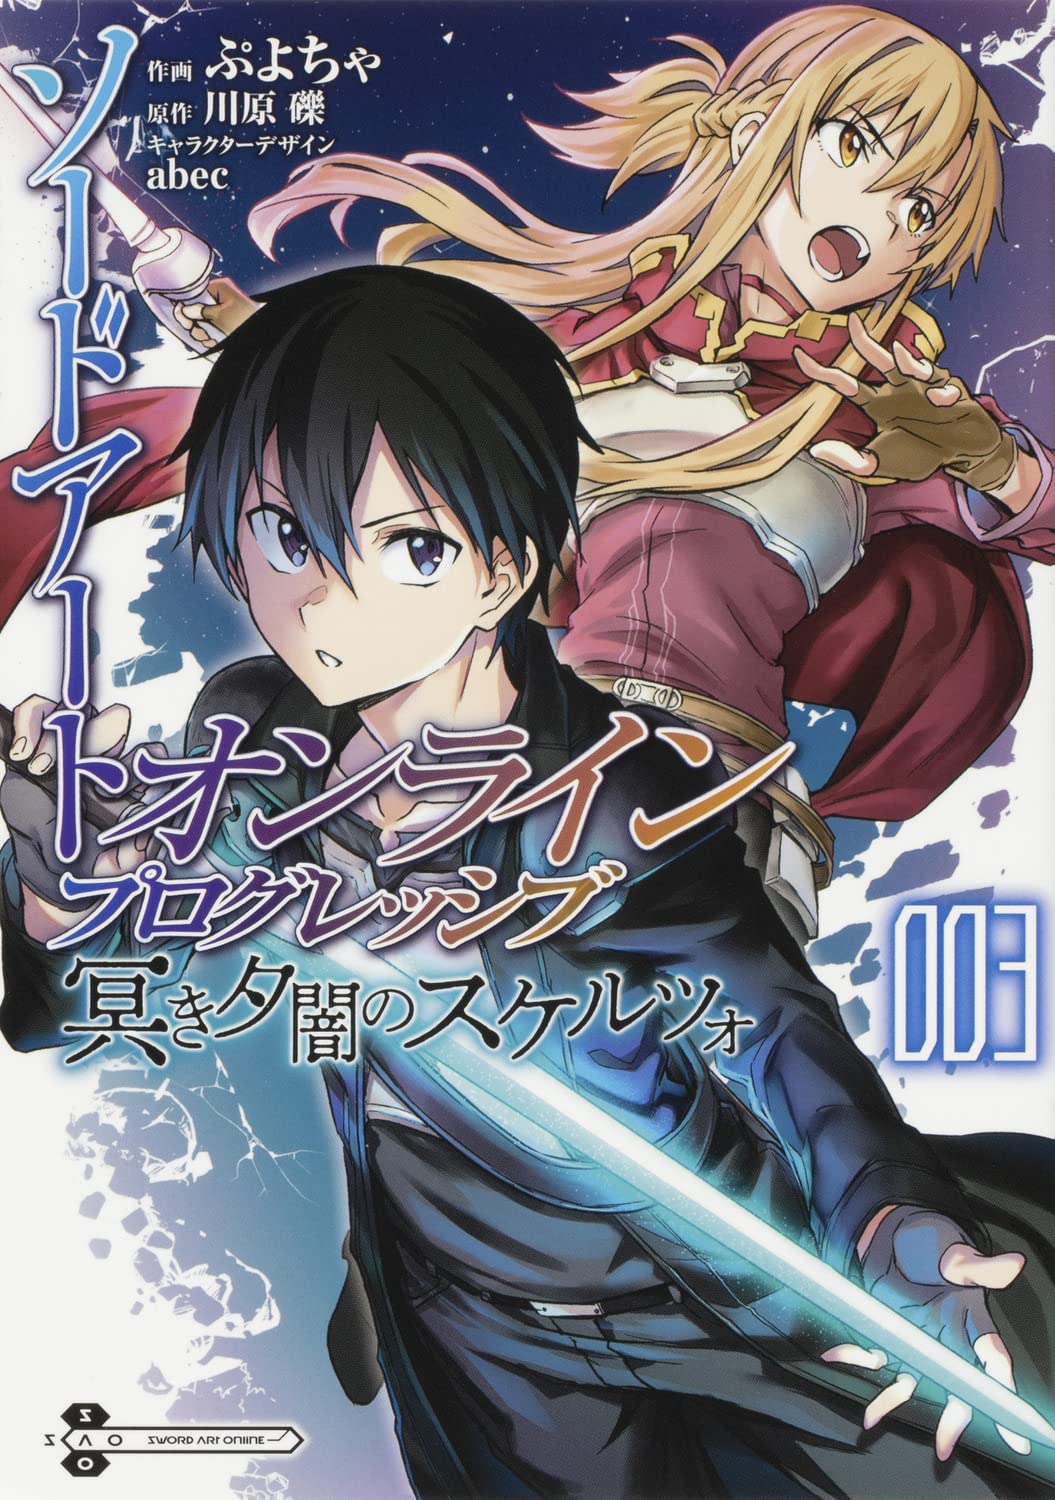 Sword Art Online: Project Alicization, Vol. 1 (manga)|Paperback